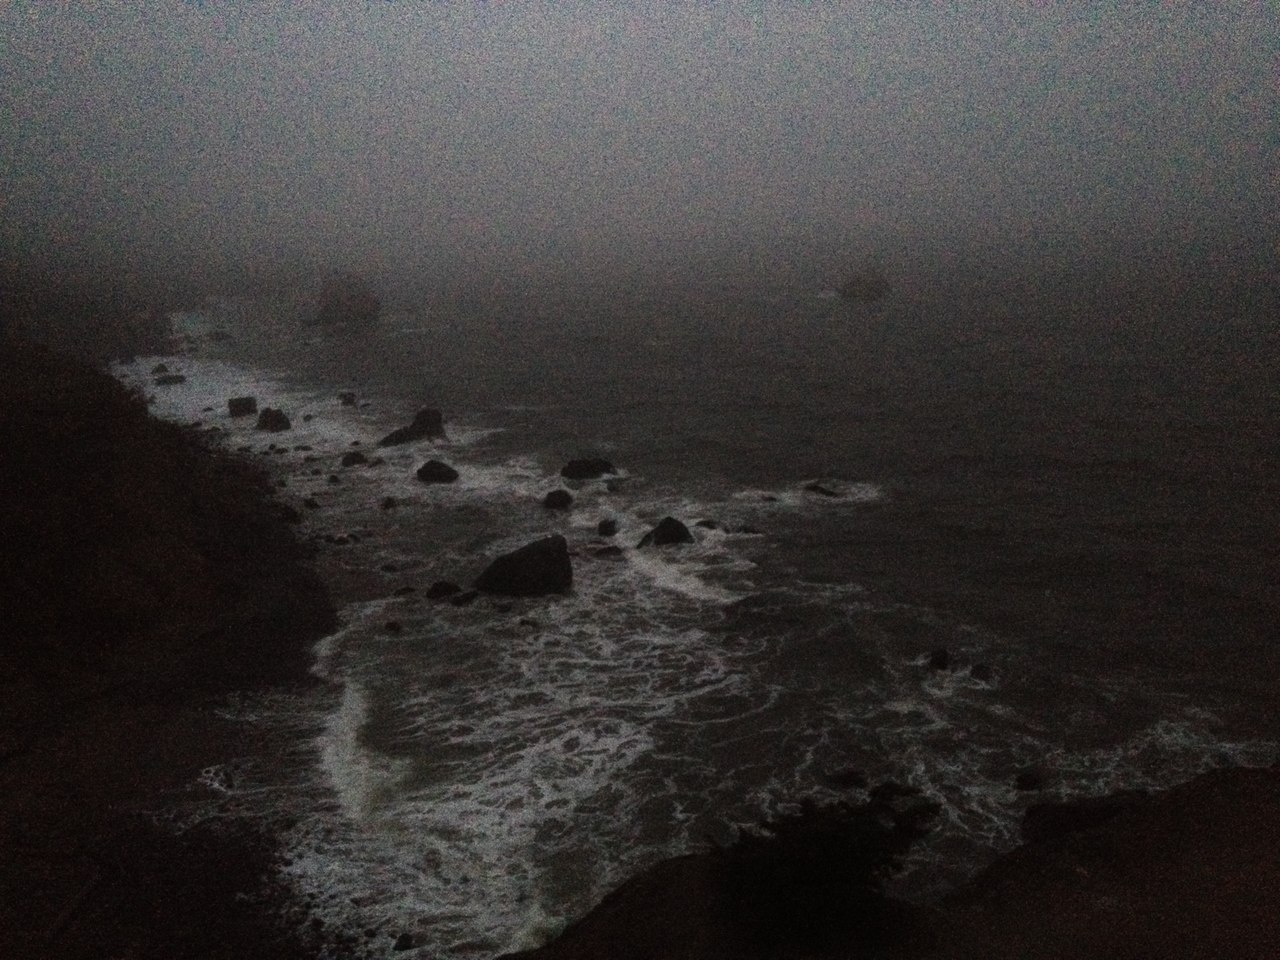 Ocean in the dark